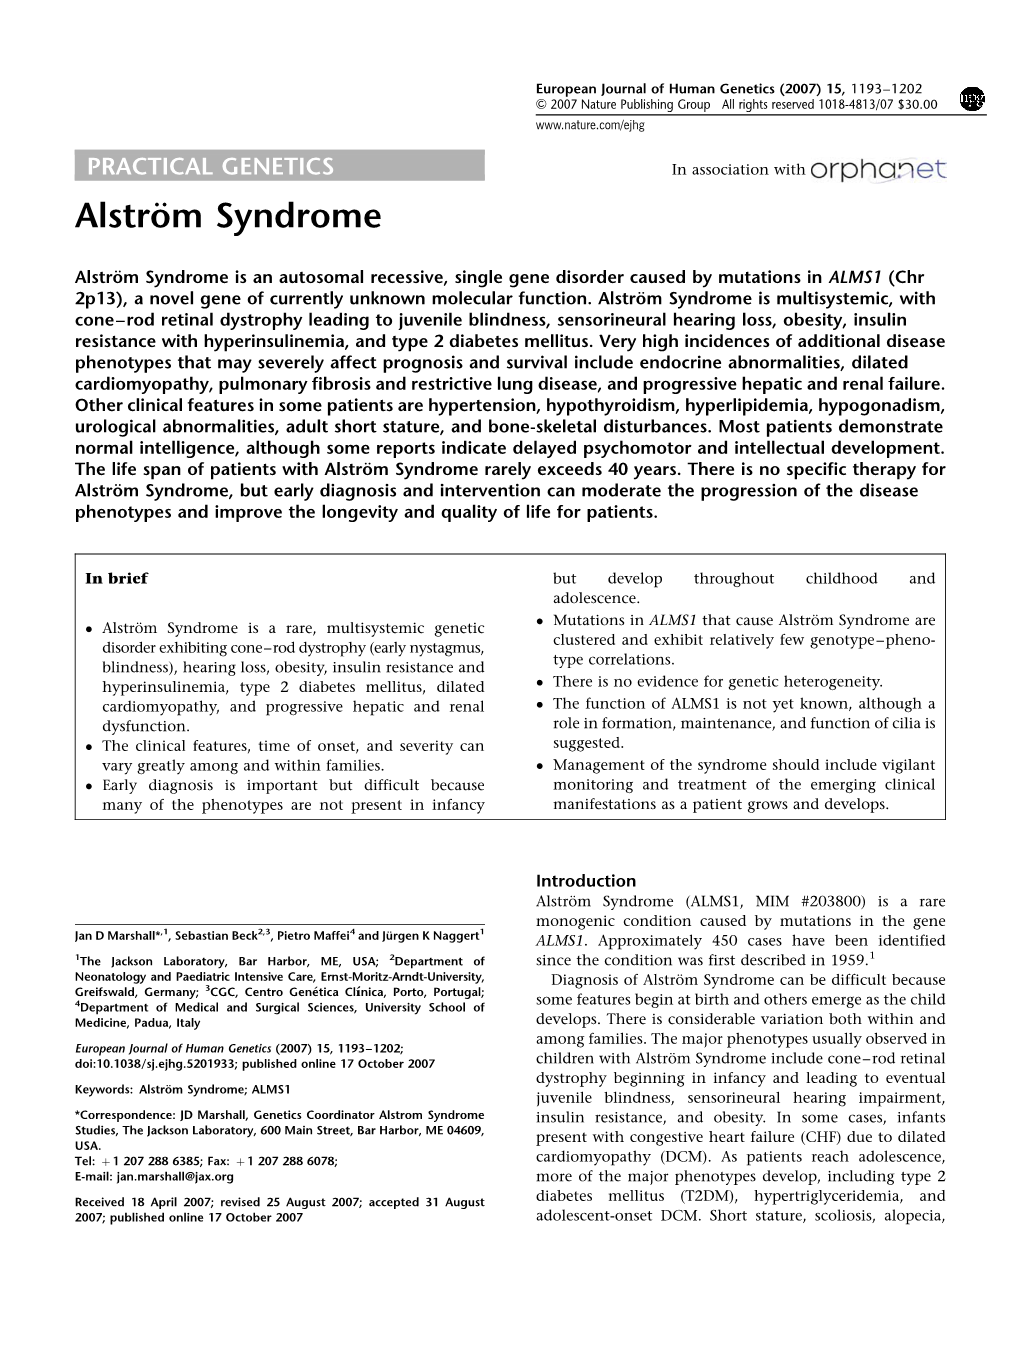 Alstro¨M Syndrome